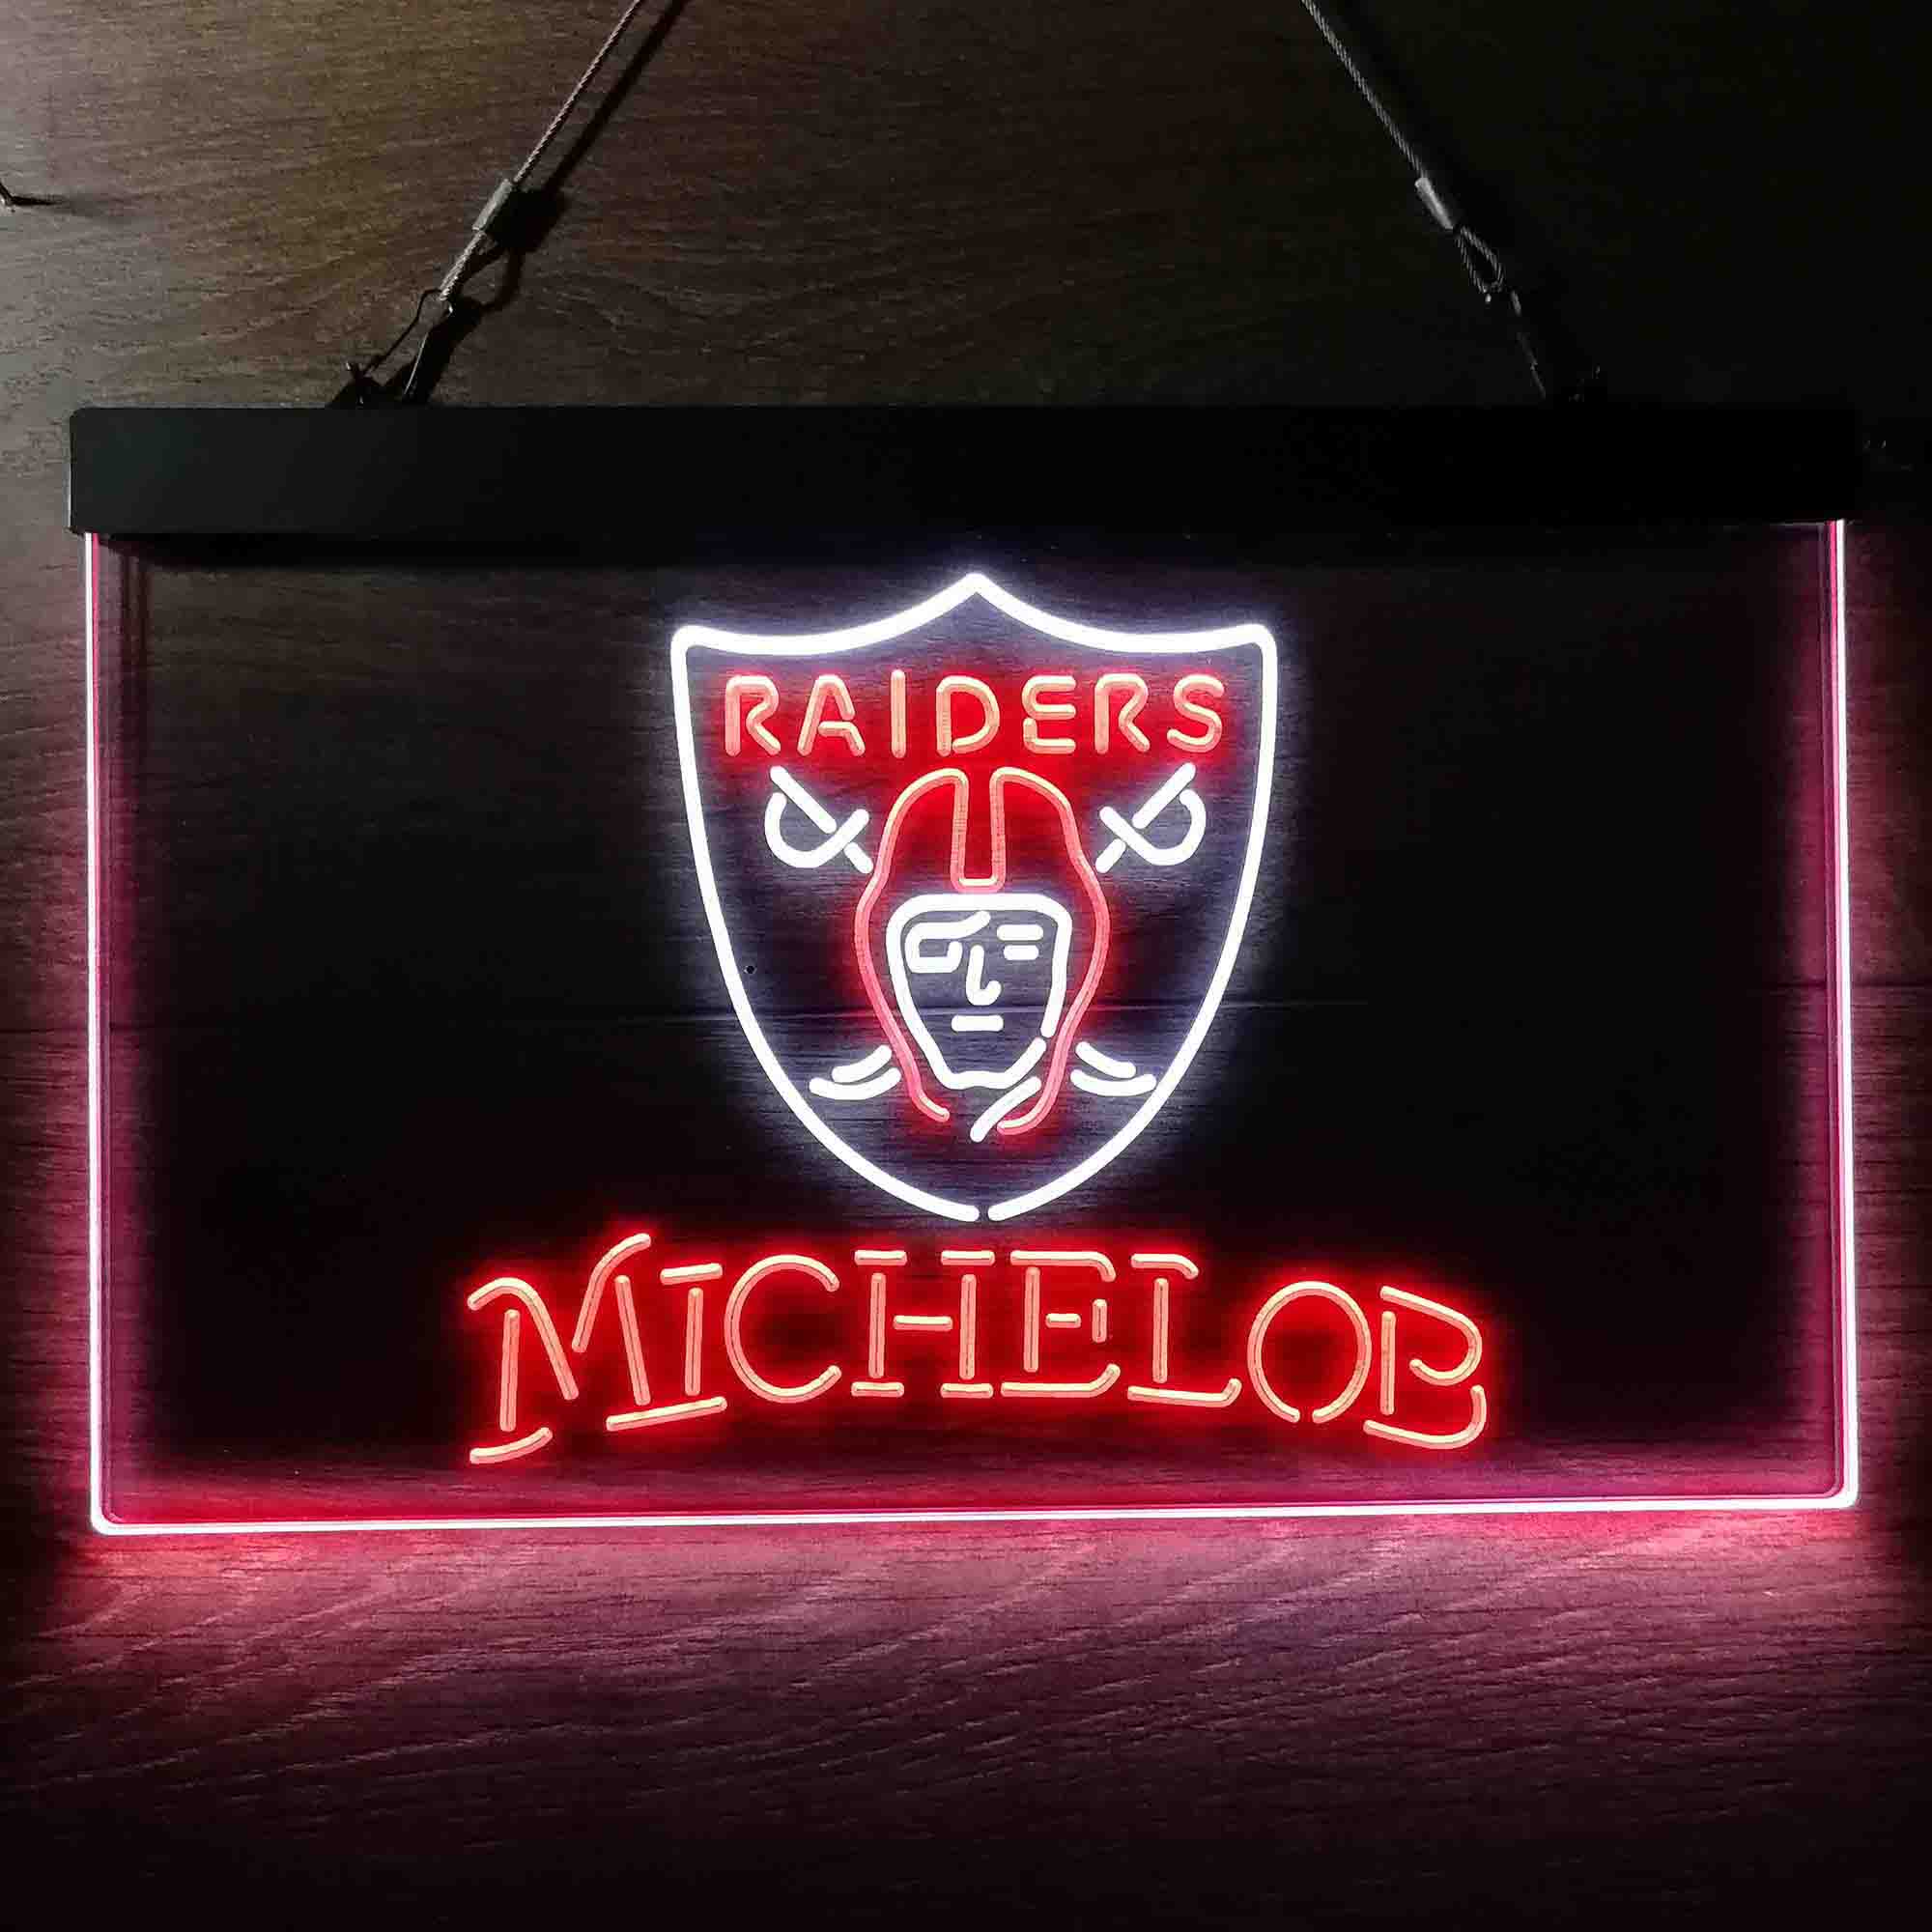 Michelob Bar Las Vegas Raiders Neon LED Sign